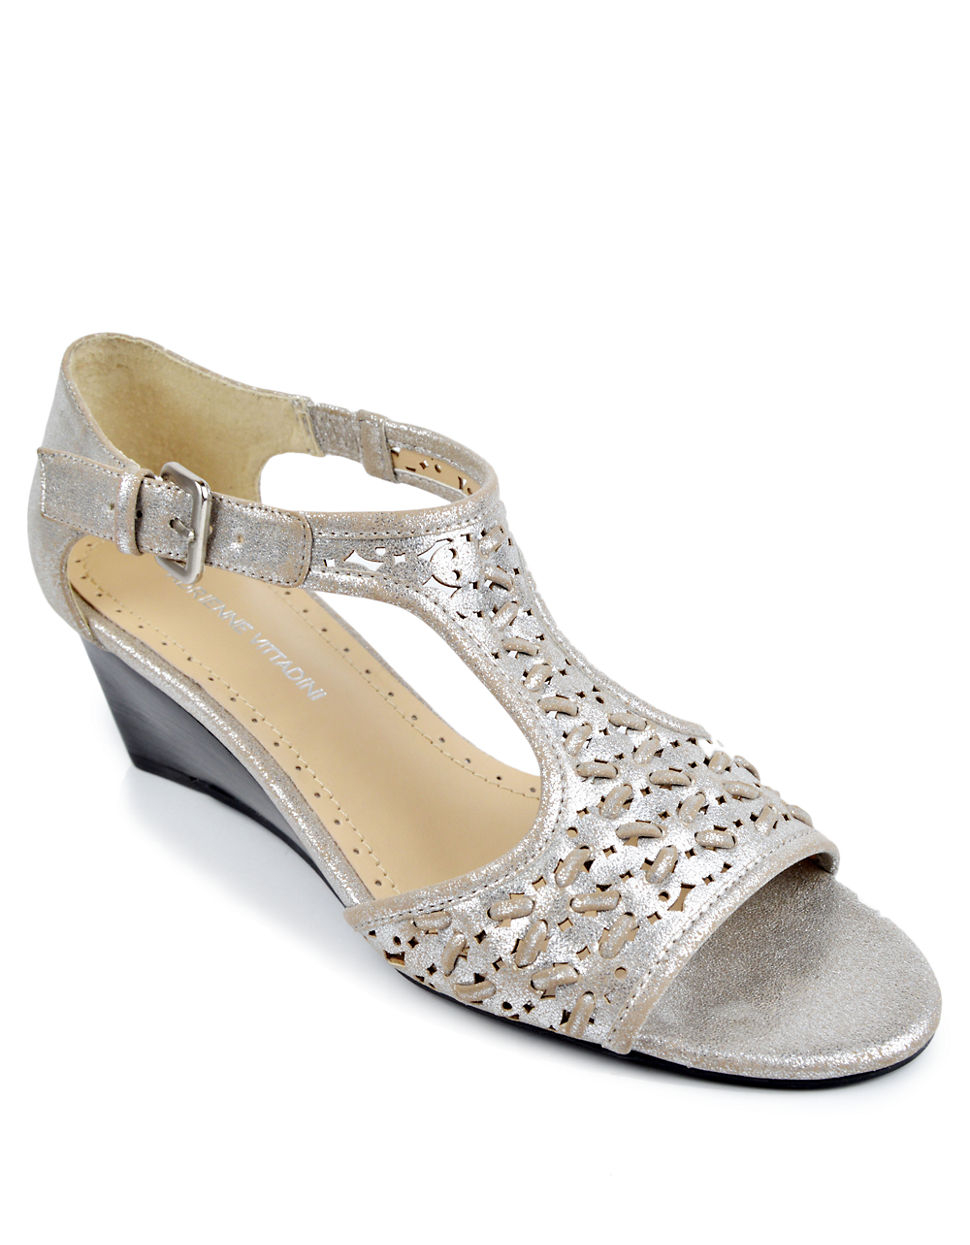 Adrienne Vittadini Caldre Metallic Suede Wedge Sandals in Metallic - Lyst